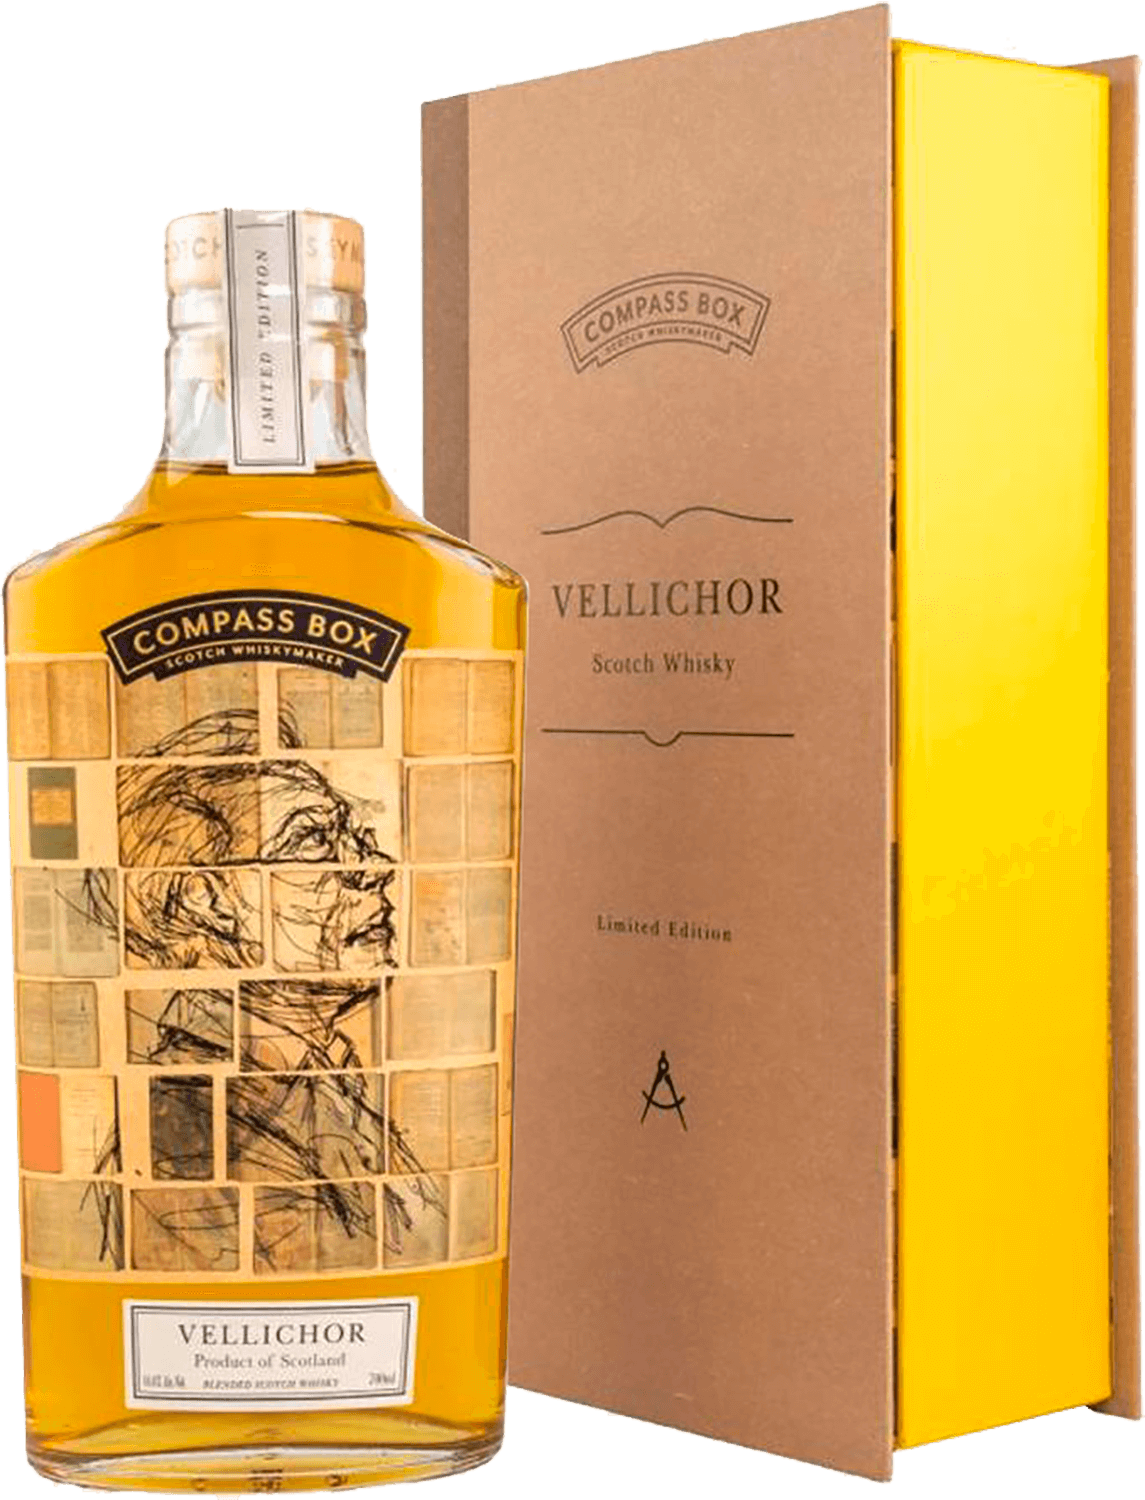 Compass Box Vellichor Blended Scotch Whisky (gift box) arran robert burns blended scotch whisky gift box